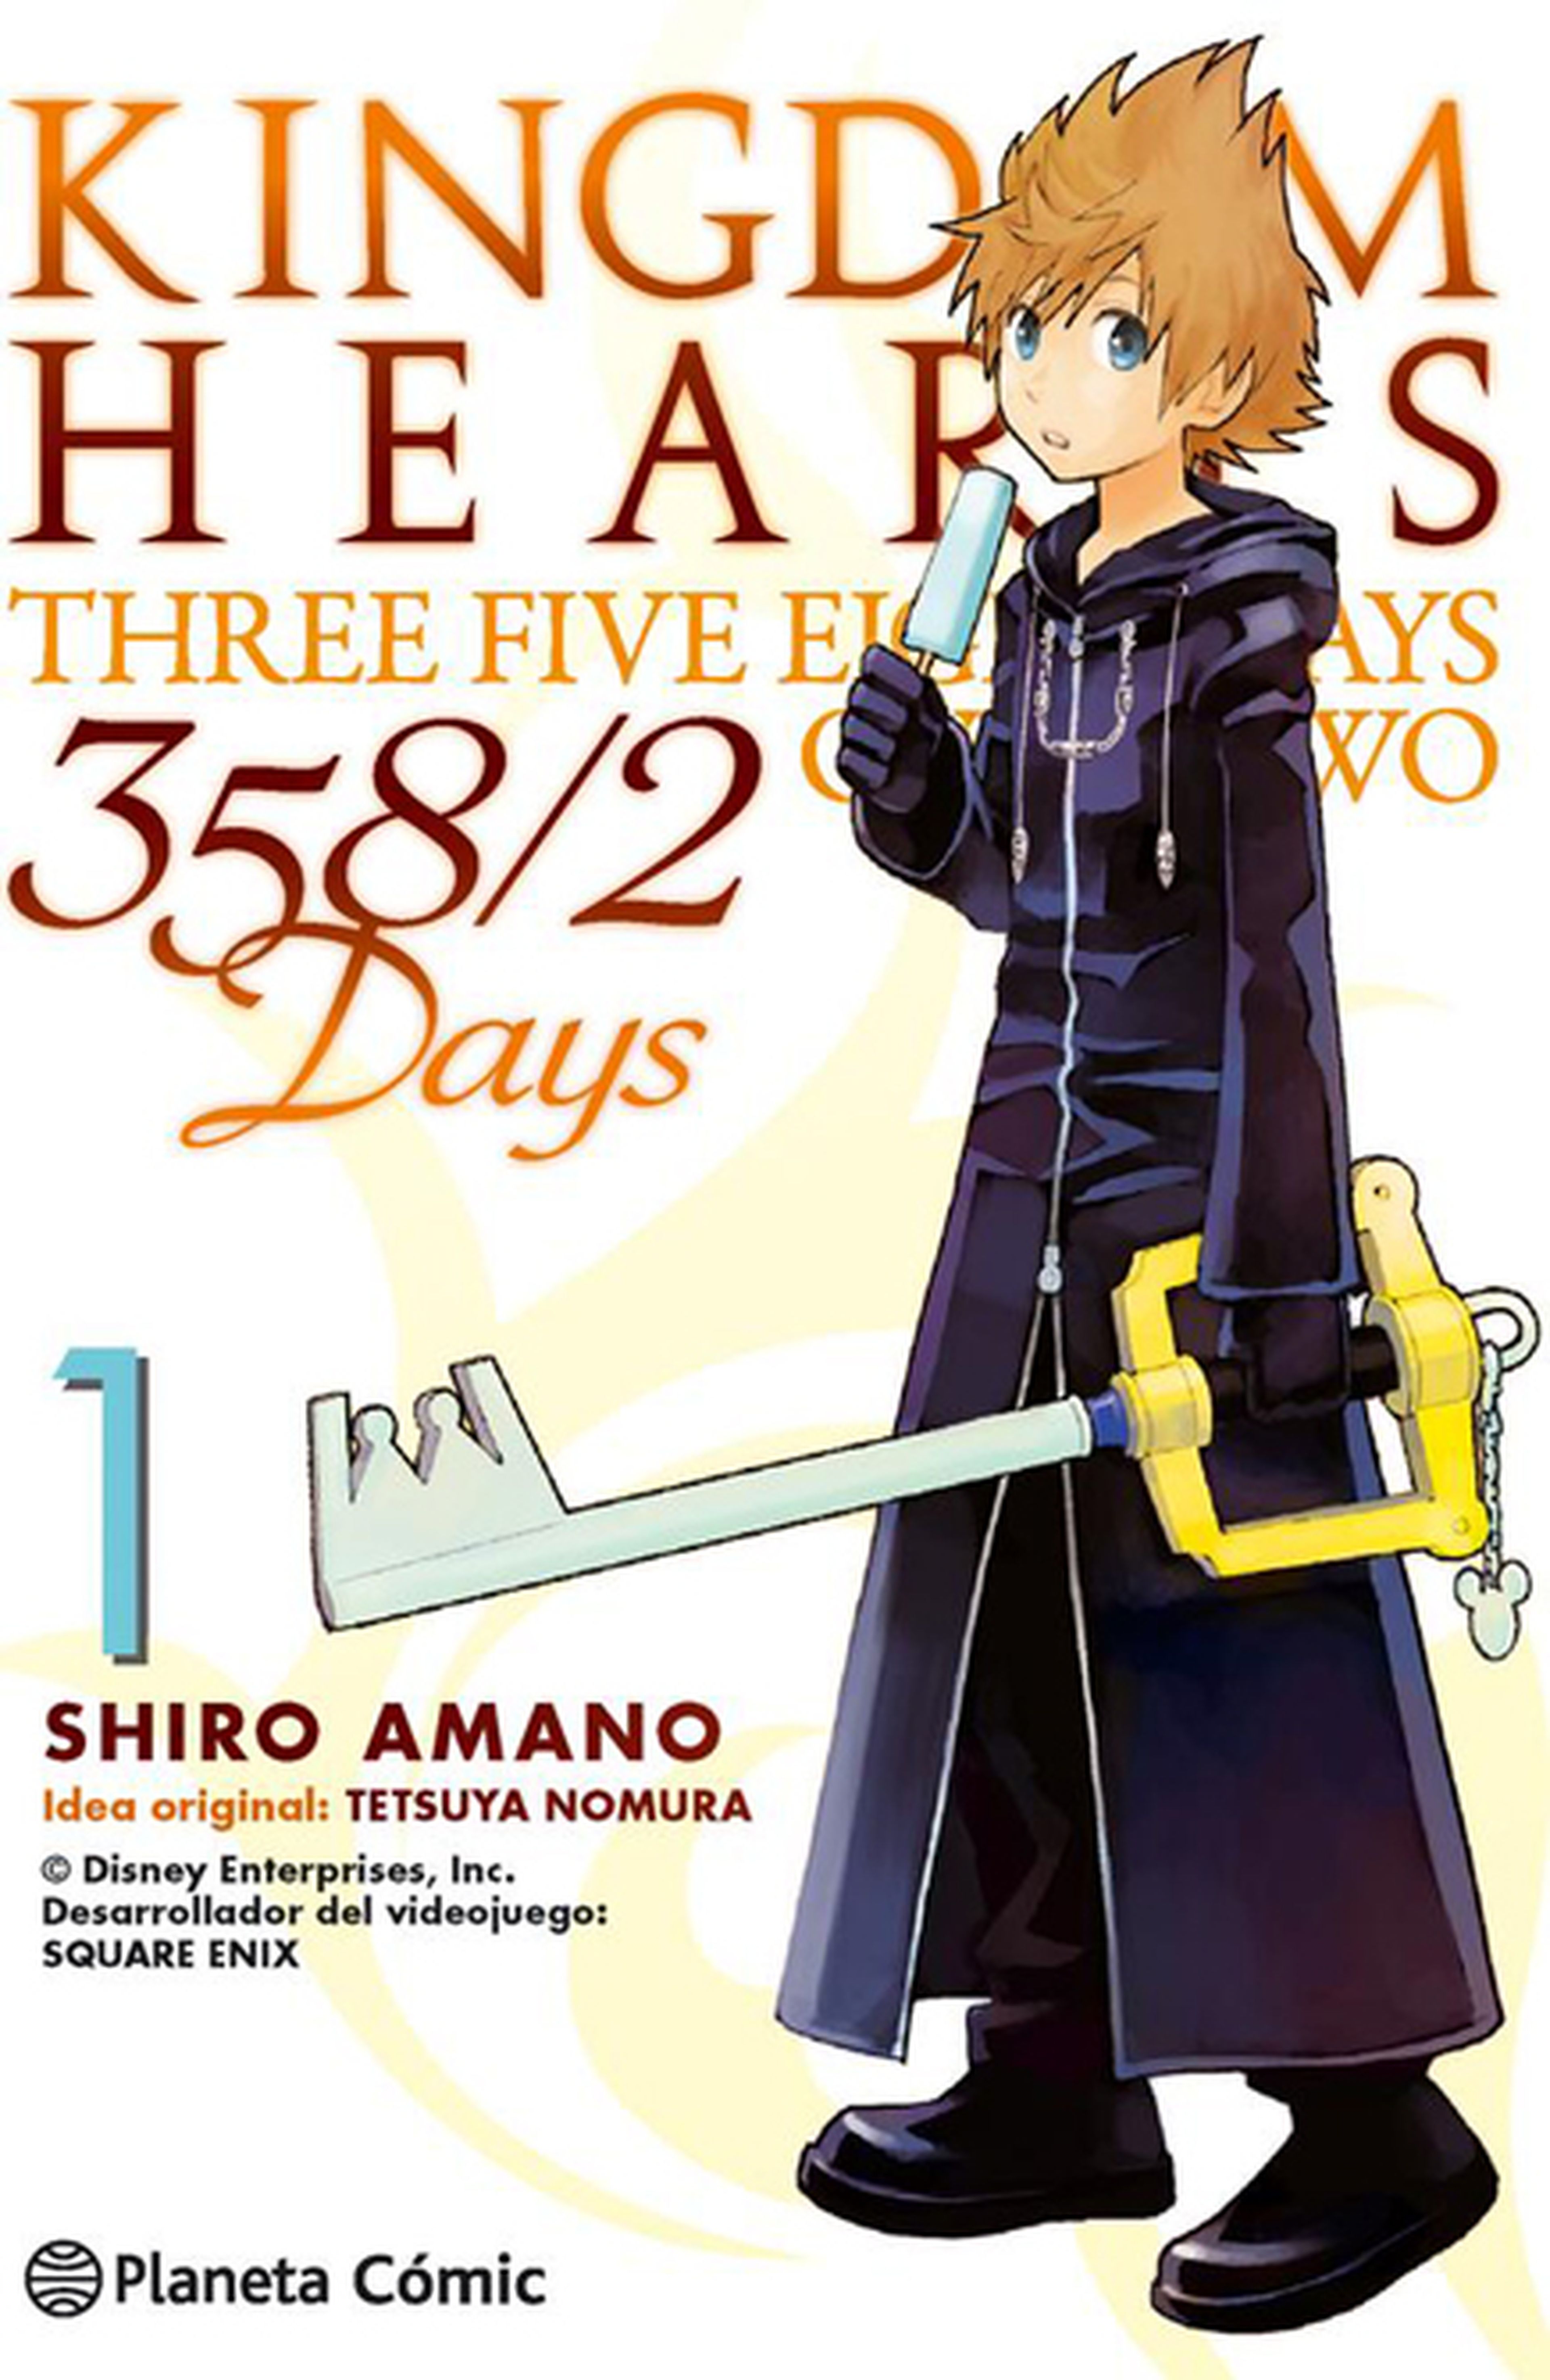 El manga Kingdom Hearts 358/2 Days, en julio